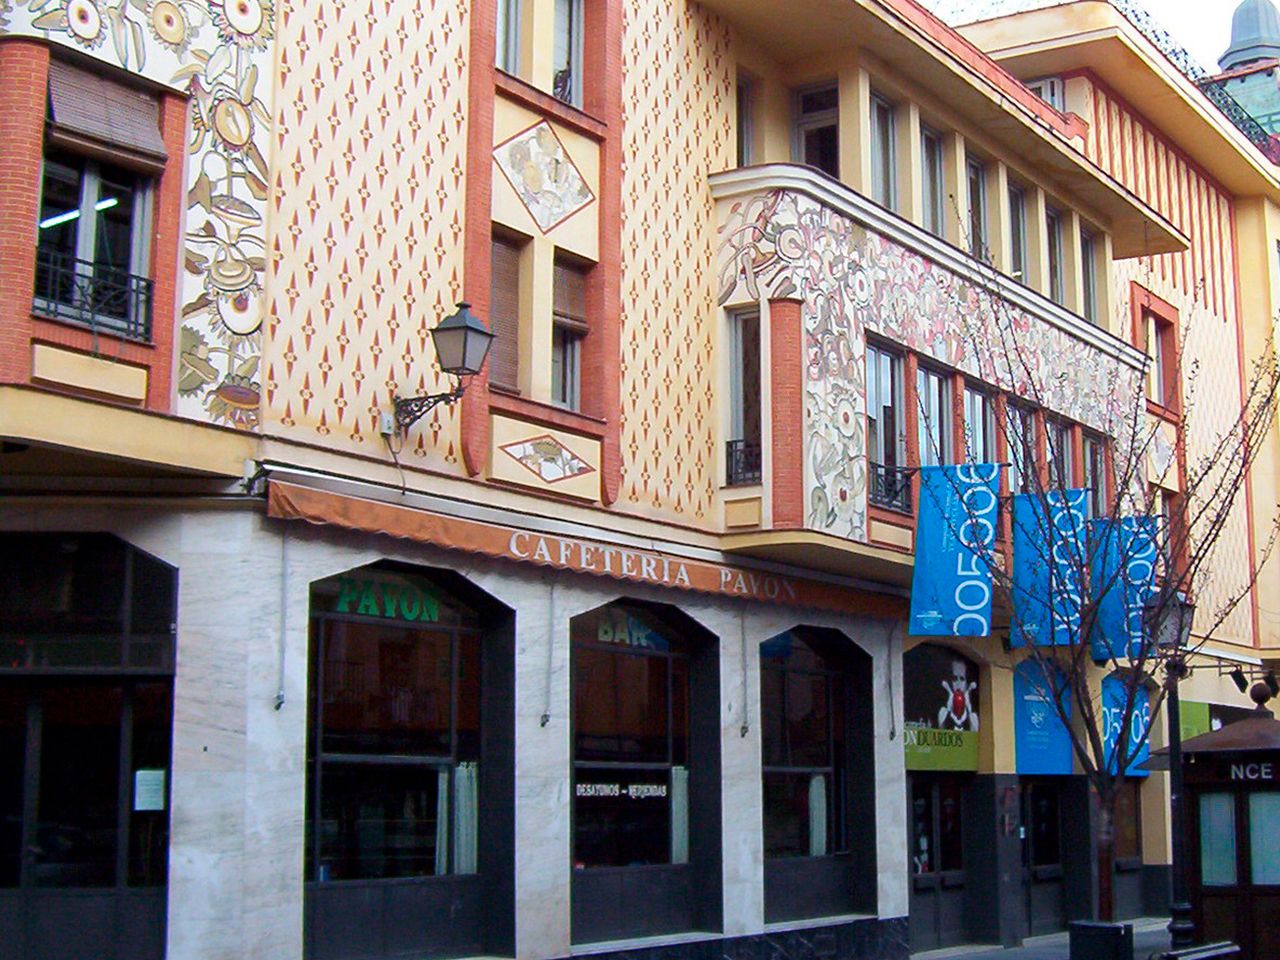 Las Bragas - Teatro Madrid